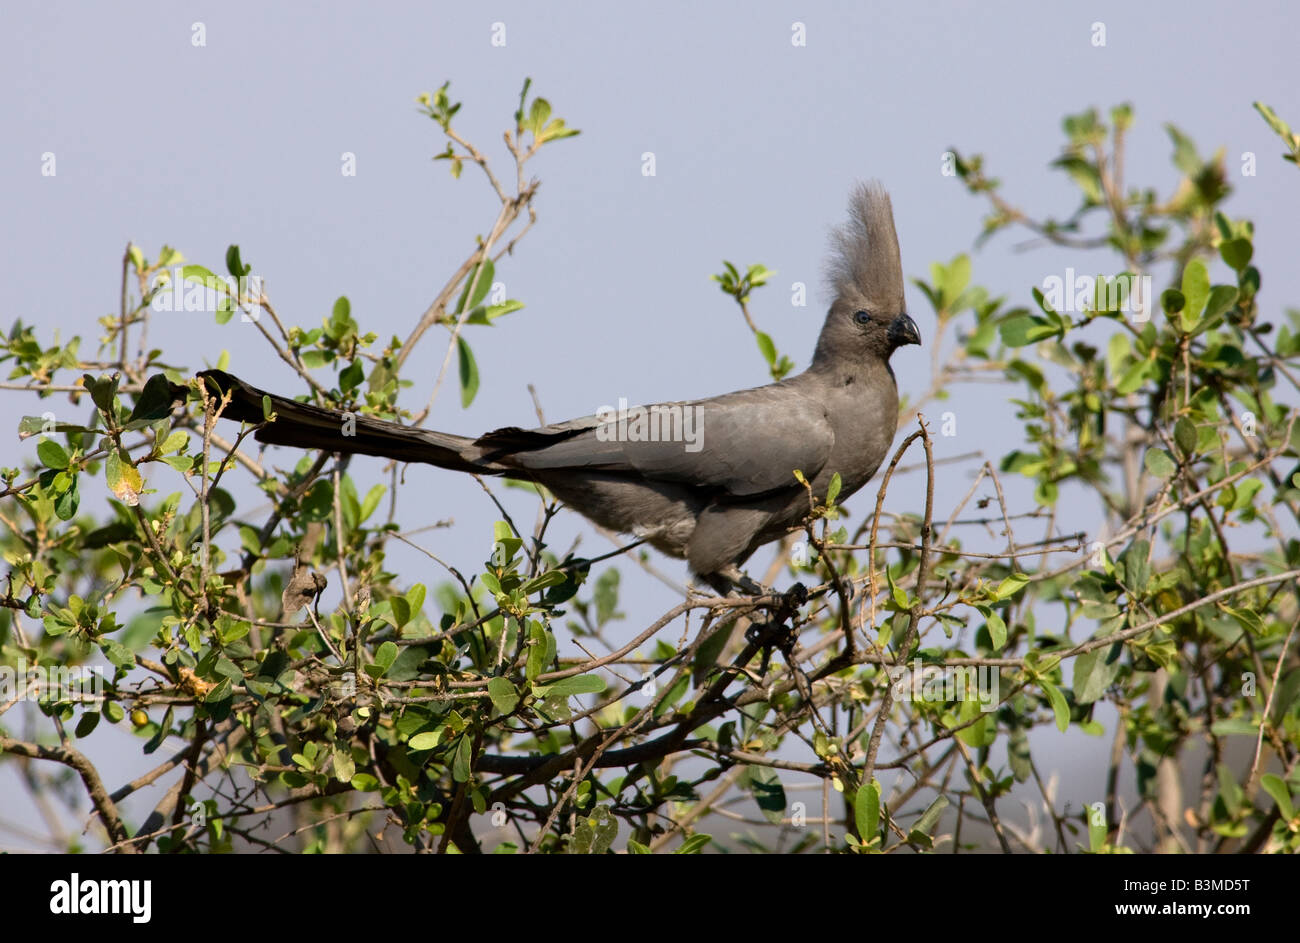 Graue Go-away-Bird (Corythaixoides Concolor), auch bekannt als grau Lourie, grau Loerie oder Kwêvoël, Südafrika Kruger Park Stockfoto